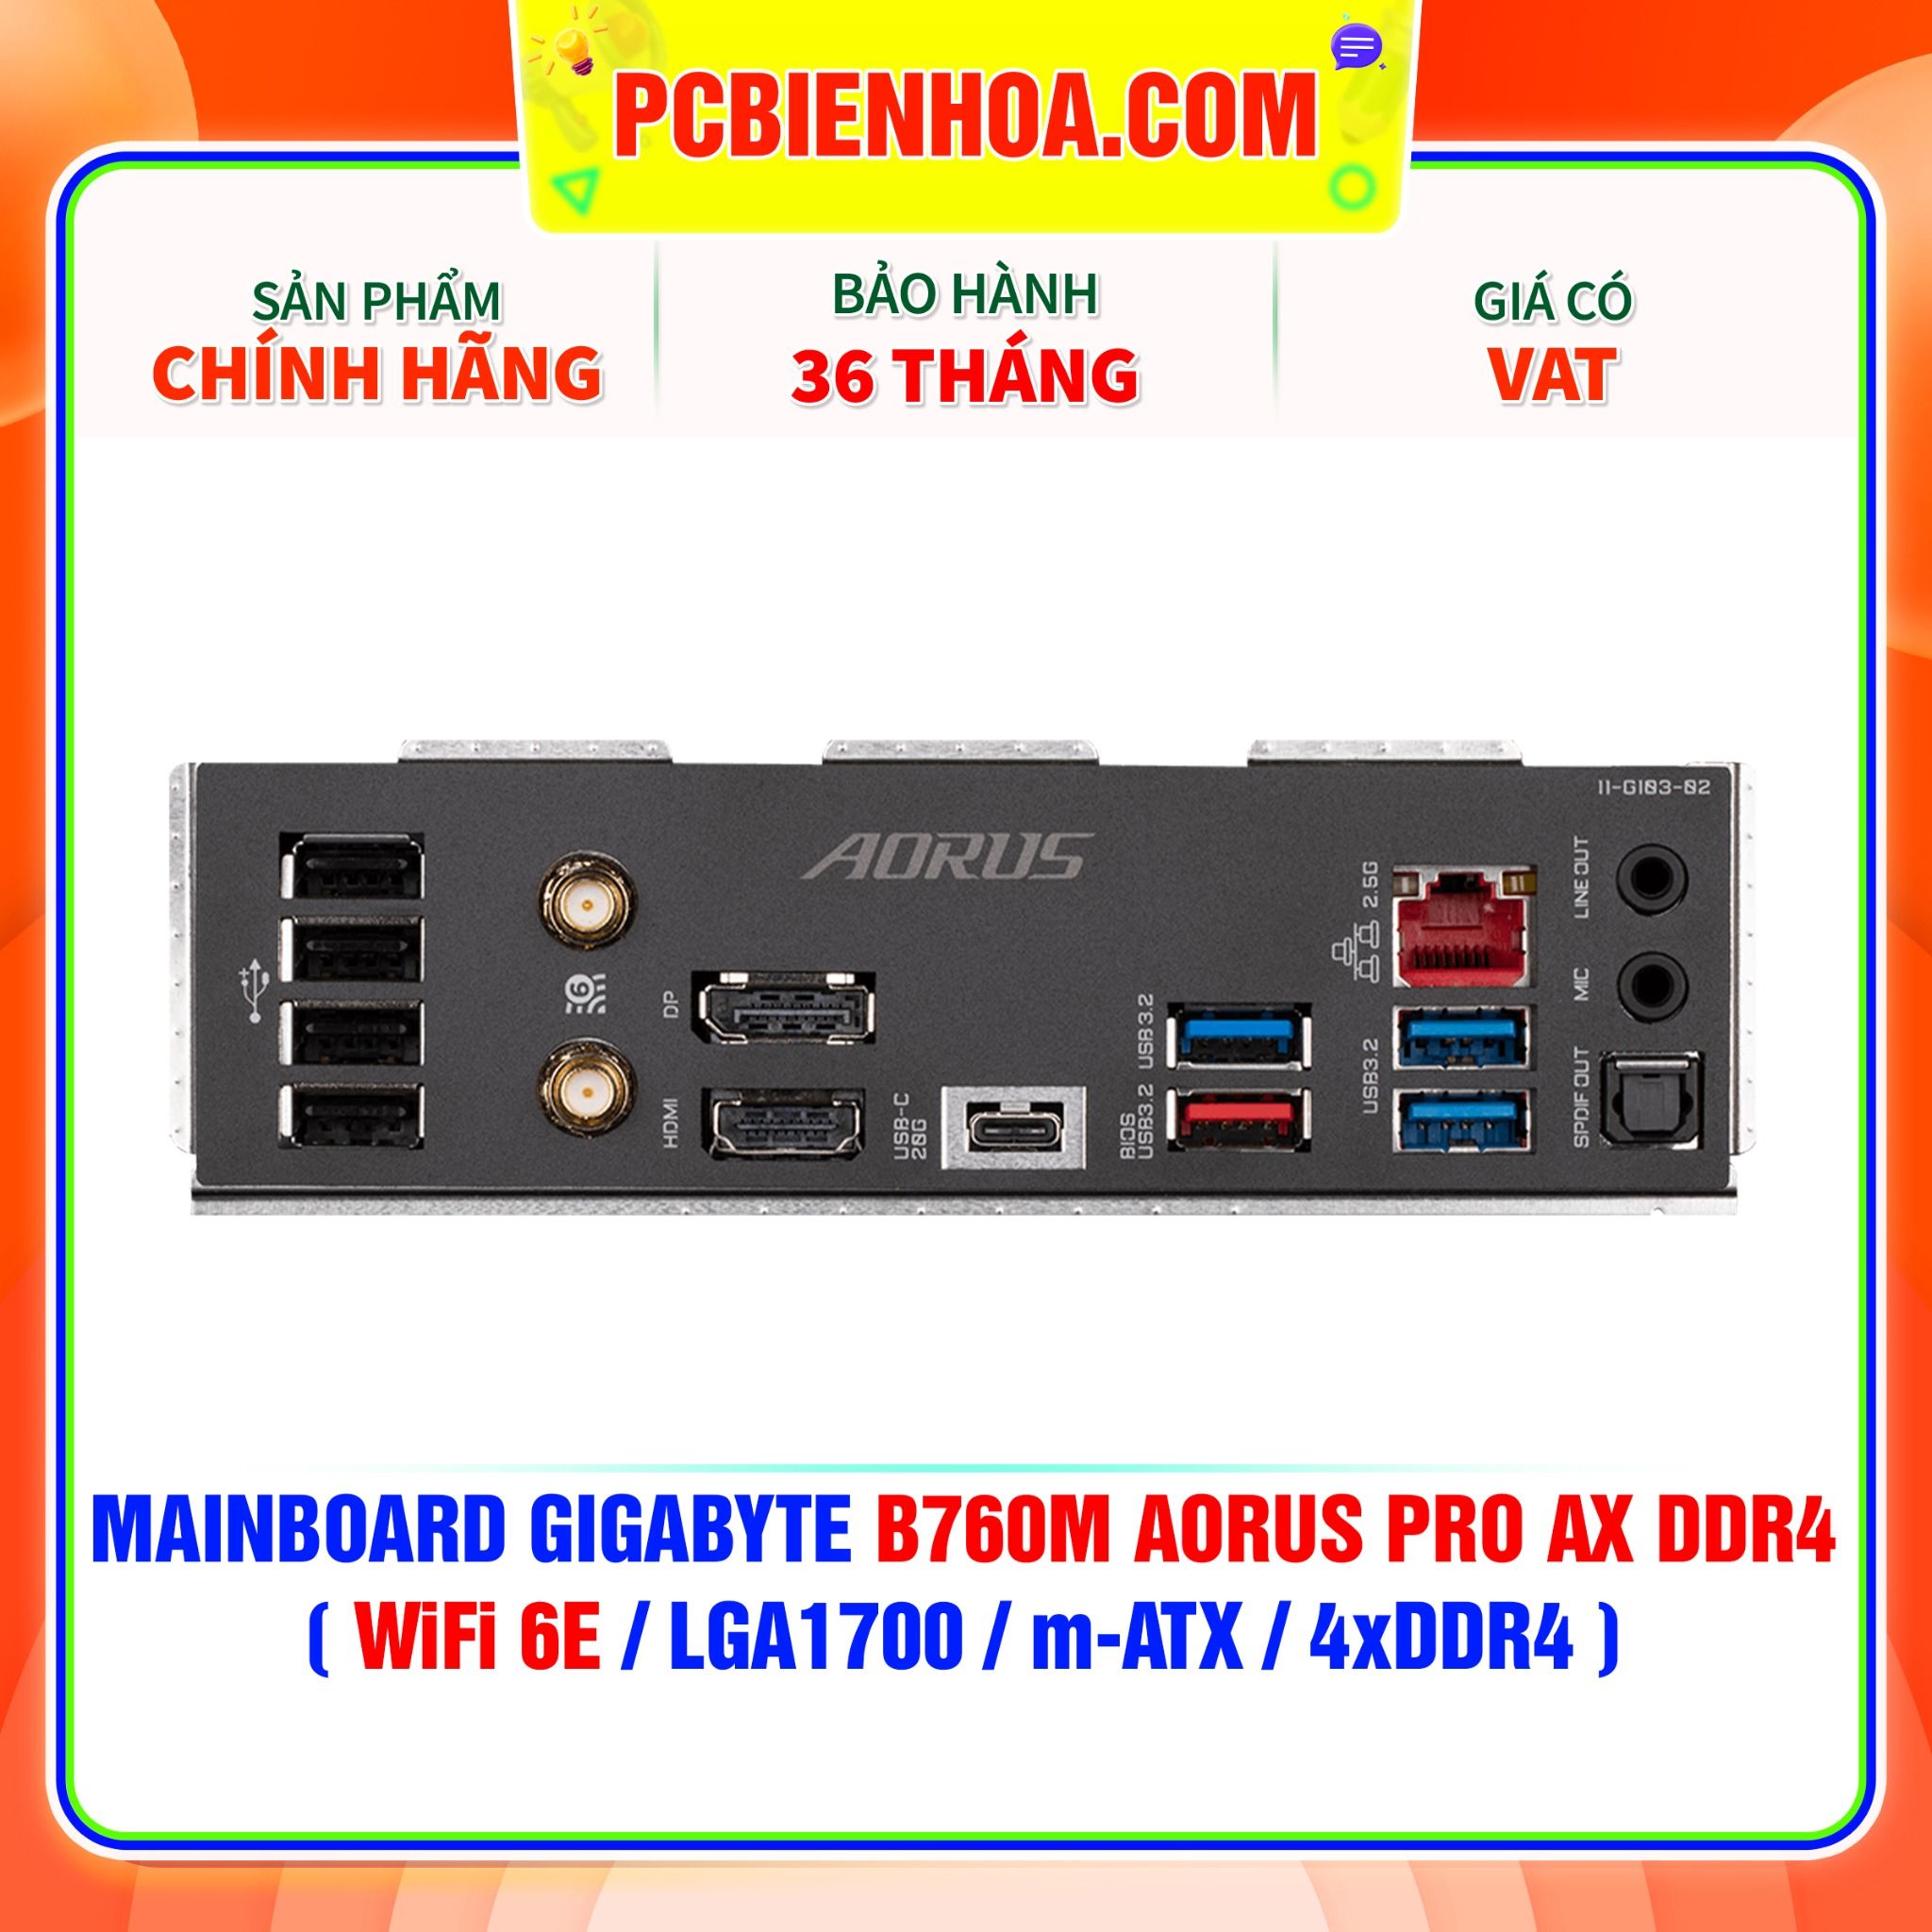  MAINBOARD GIGABYTE B760M AORUS PRO AX DDR4 ( WIFI 6E / LGA1700 / M-ATX / 4xDDR4 ) 